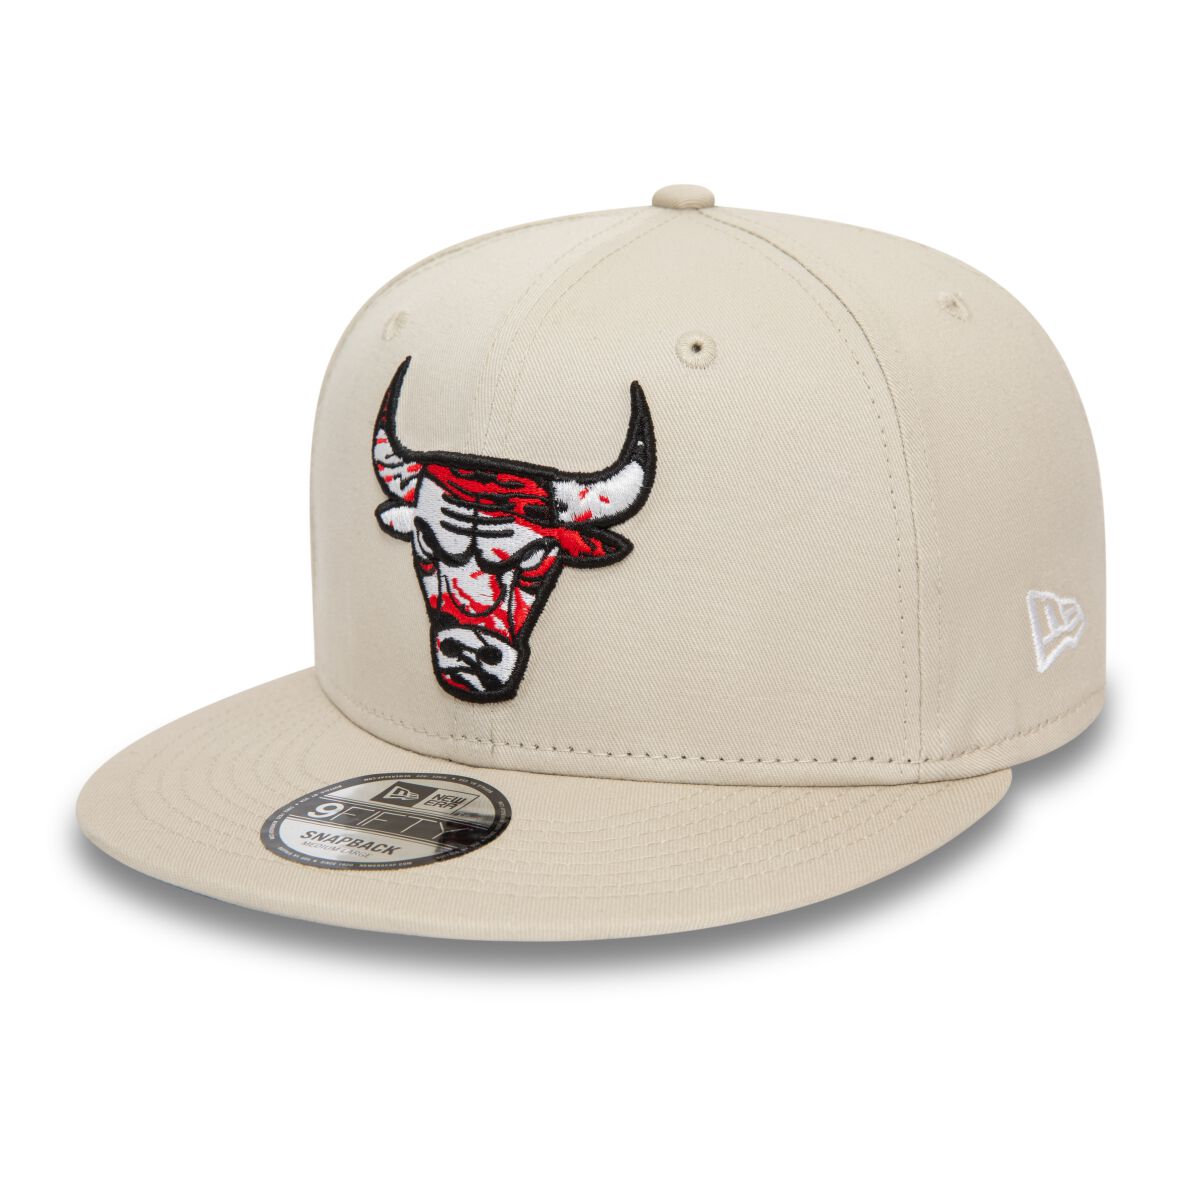 New Era - NBA Cap - 9FIFTY Seasonal Infill - Chicago Bulls - creme